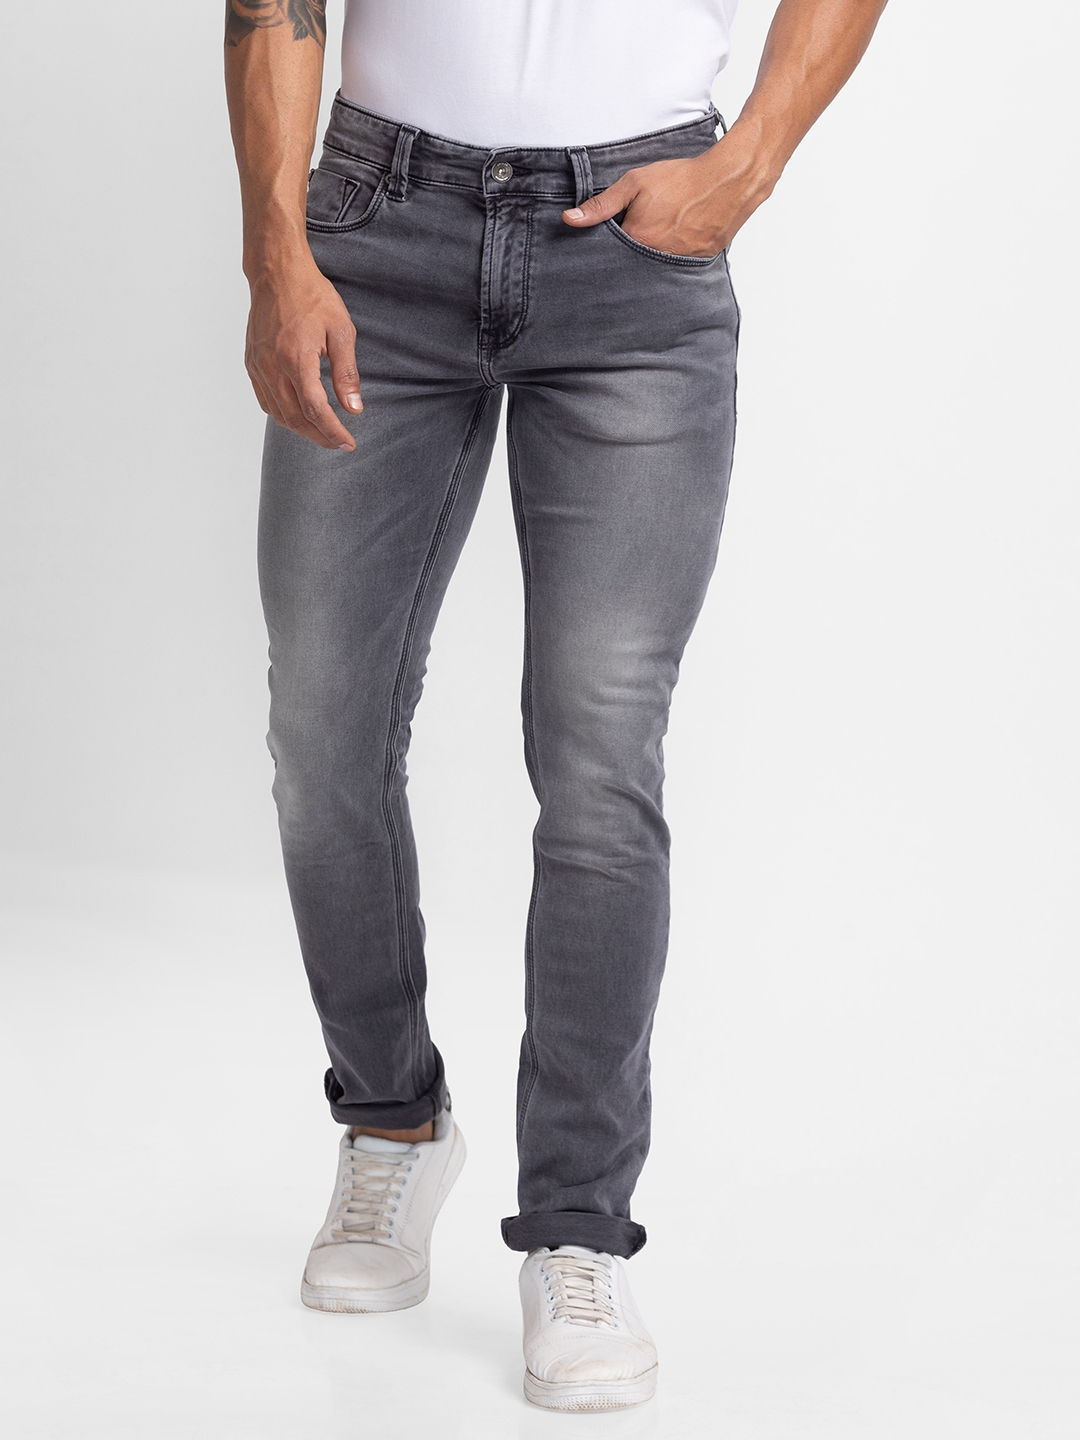 Men's Grey Cotton Solid Regular Jeans